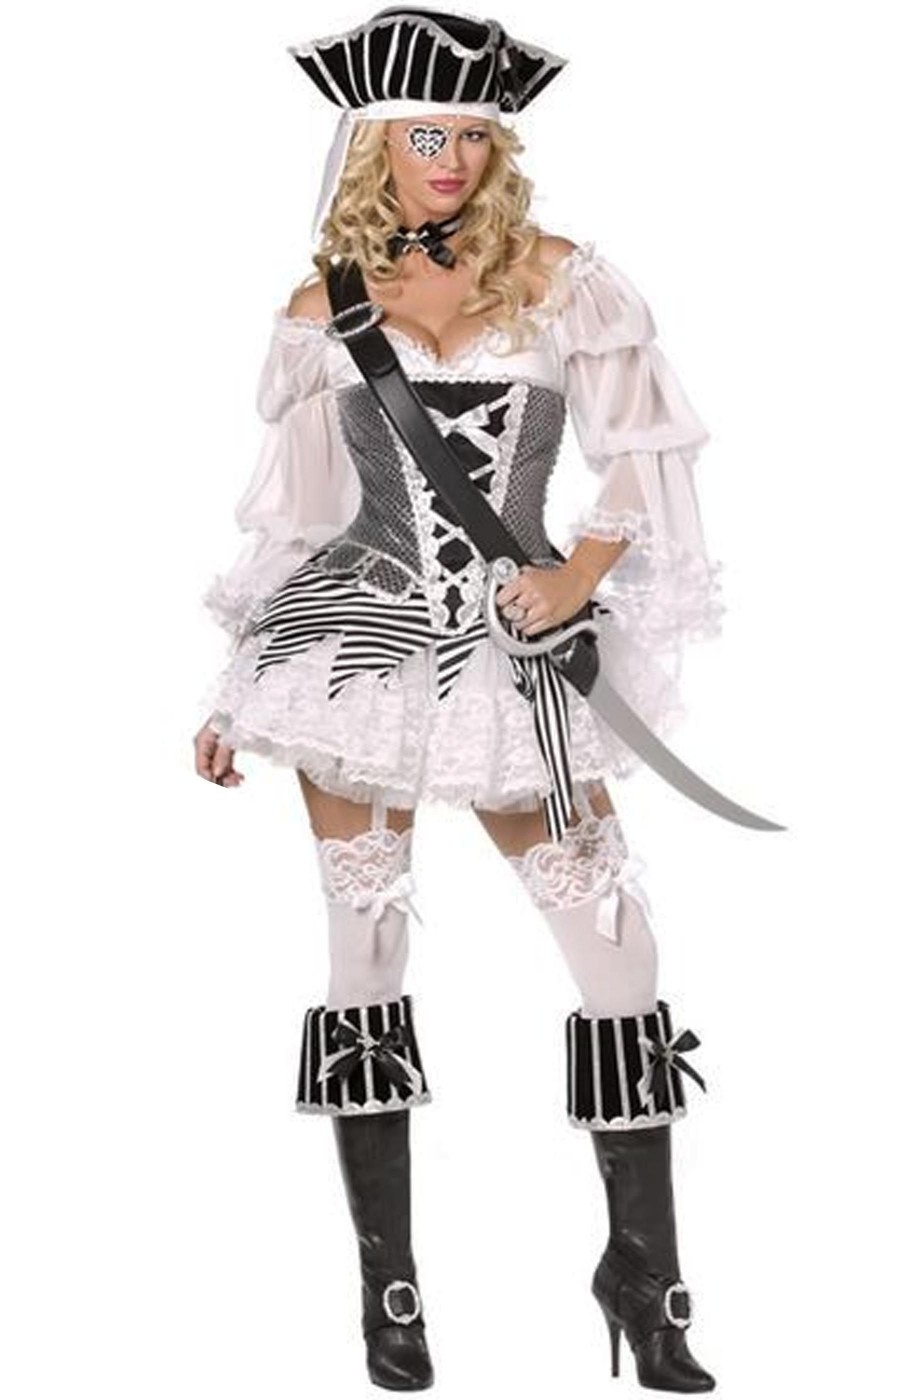 Costume donna piratessa corsara adulta bijoux bianca e nera COMPLETA